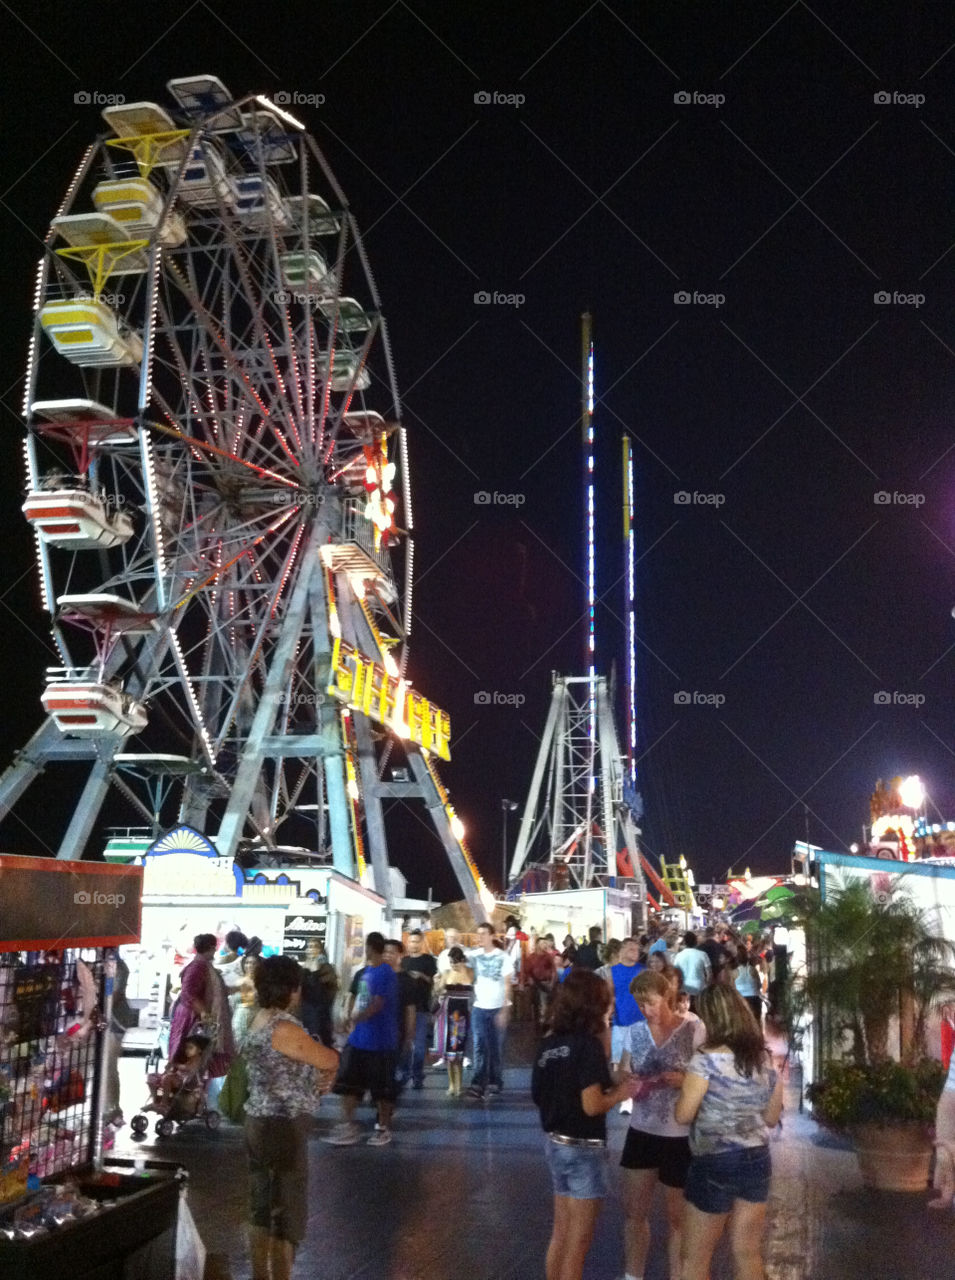 board walk night amusement park ferris wheel by IphonePhotographer